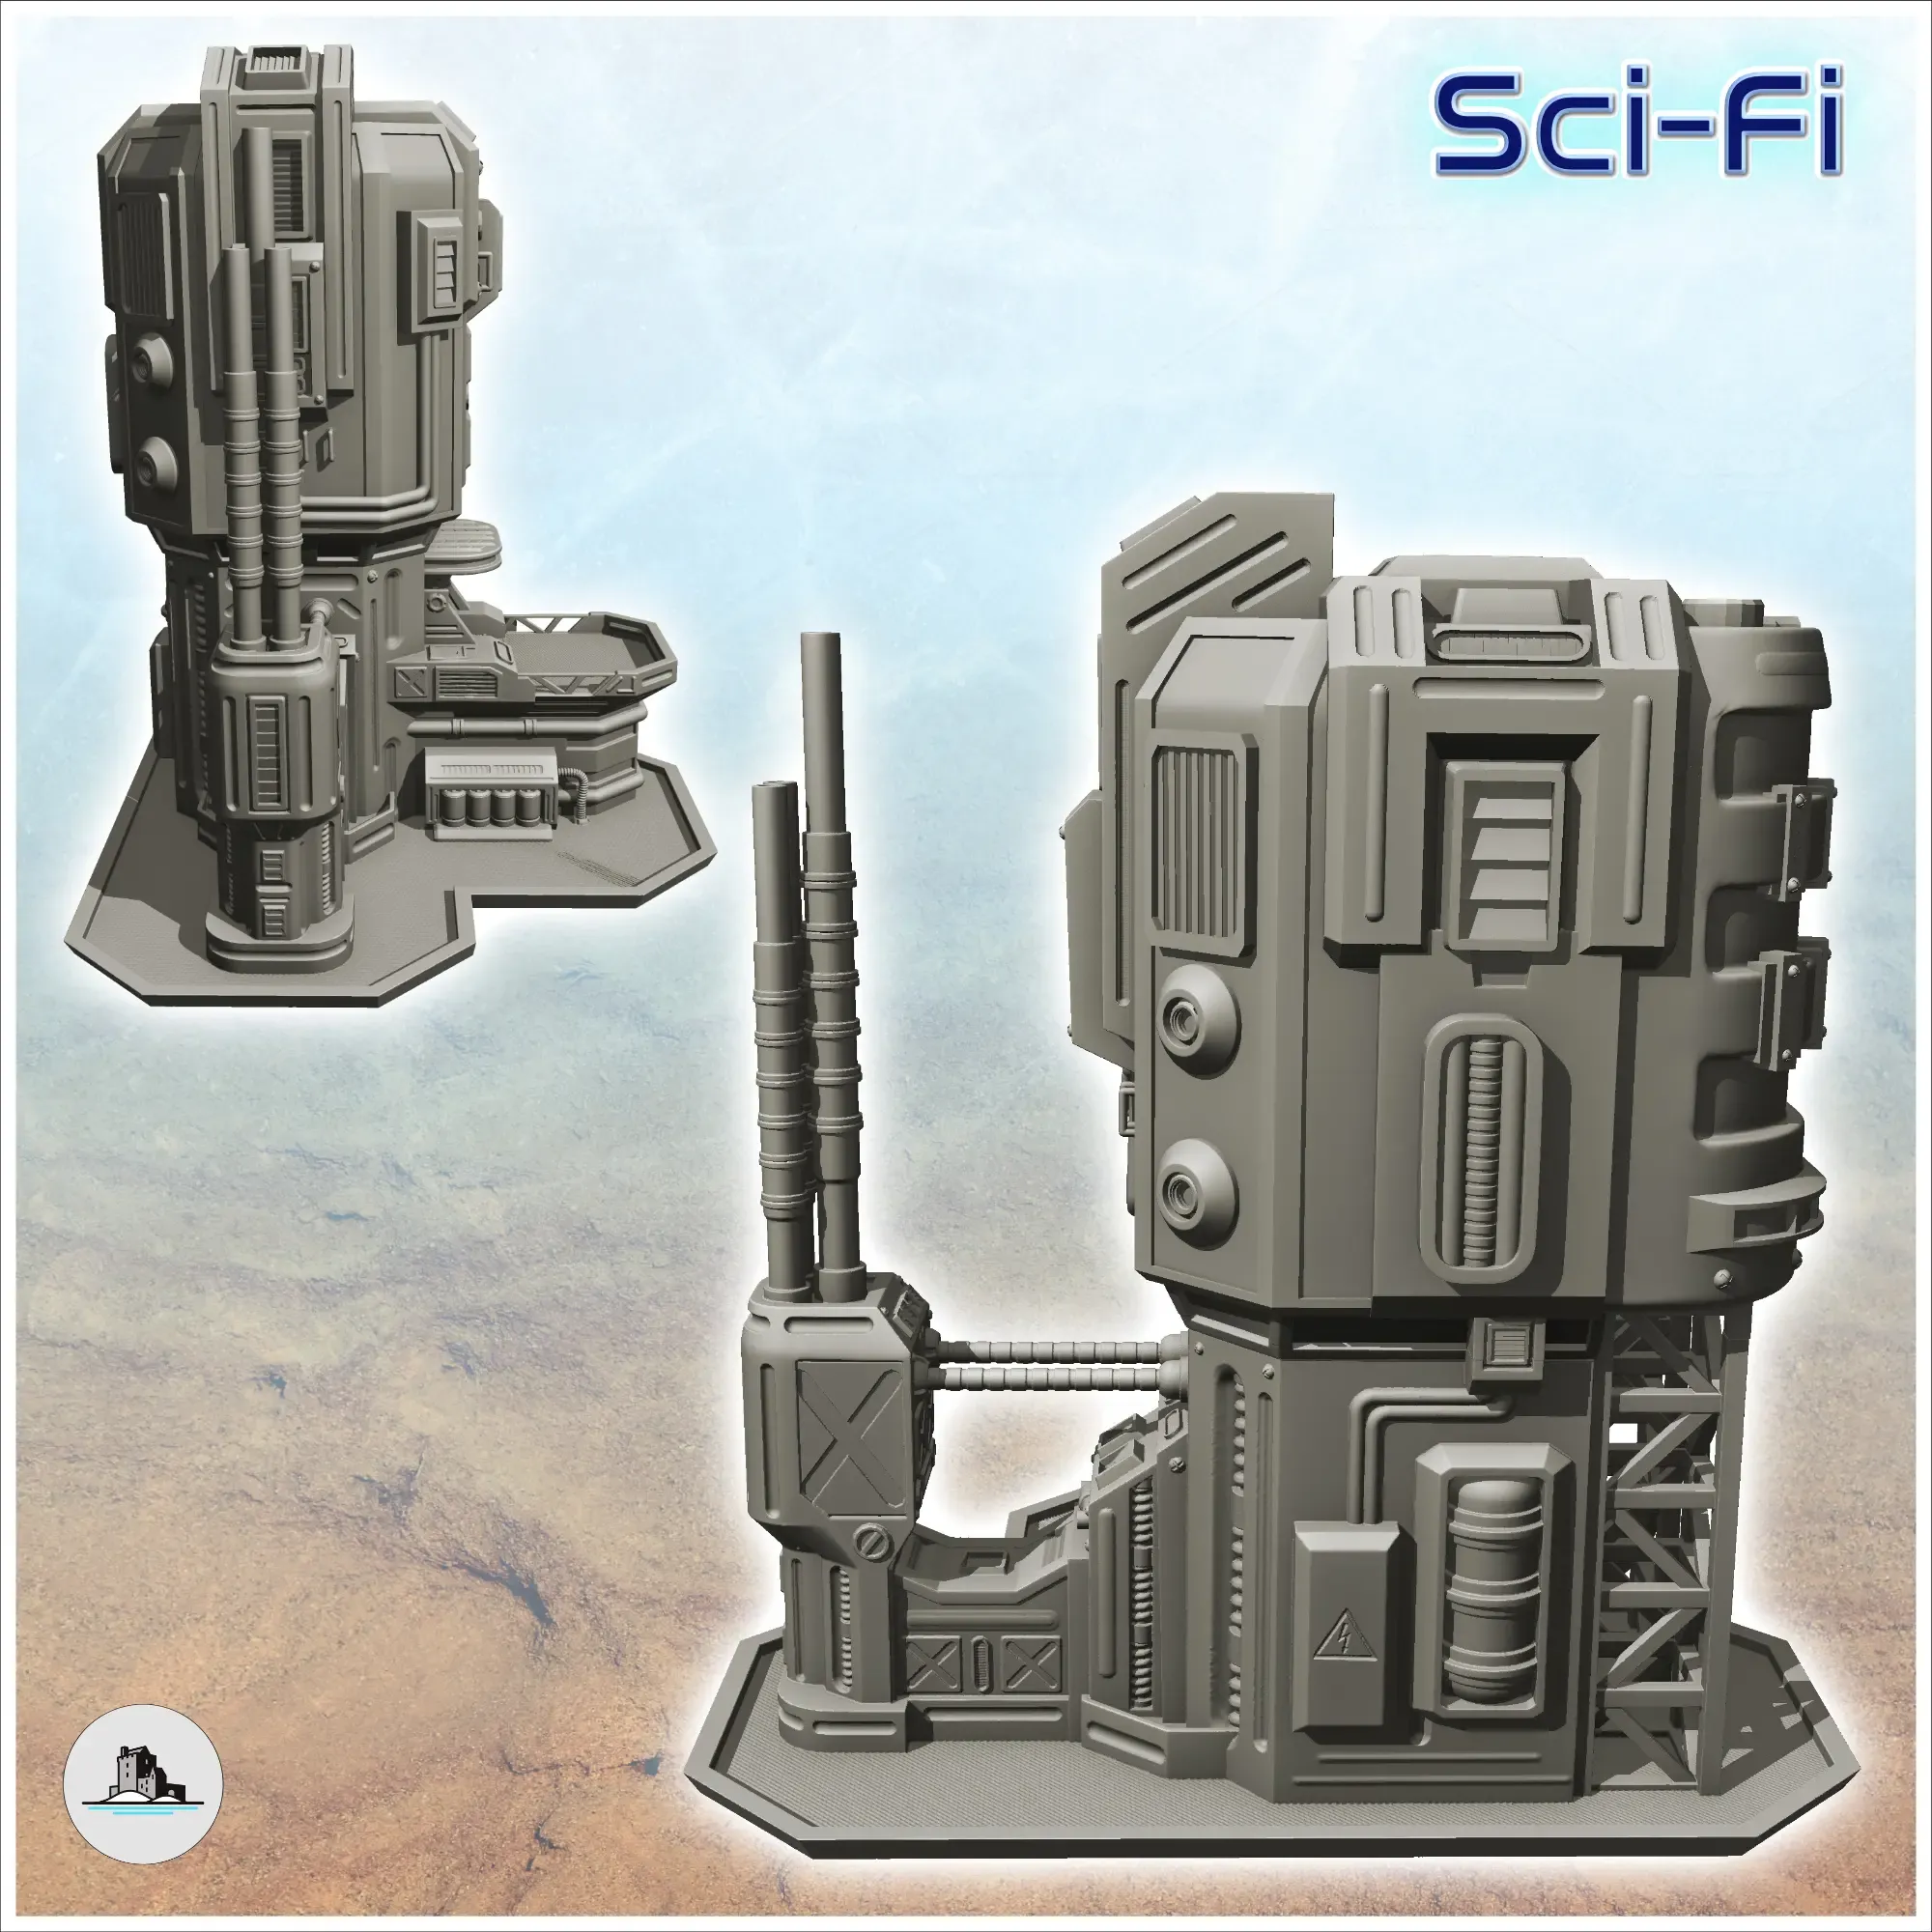 Sci-Fi industrial structure - Terrain Science fiction SF